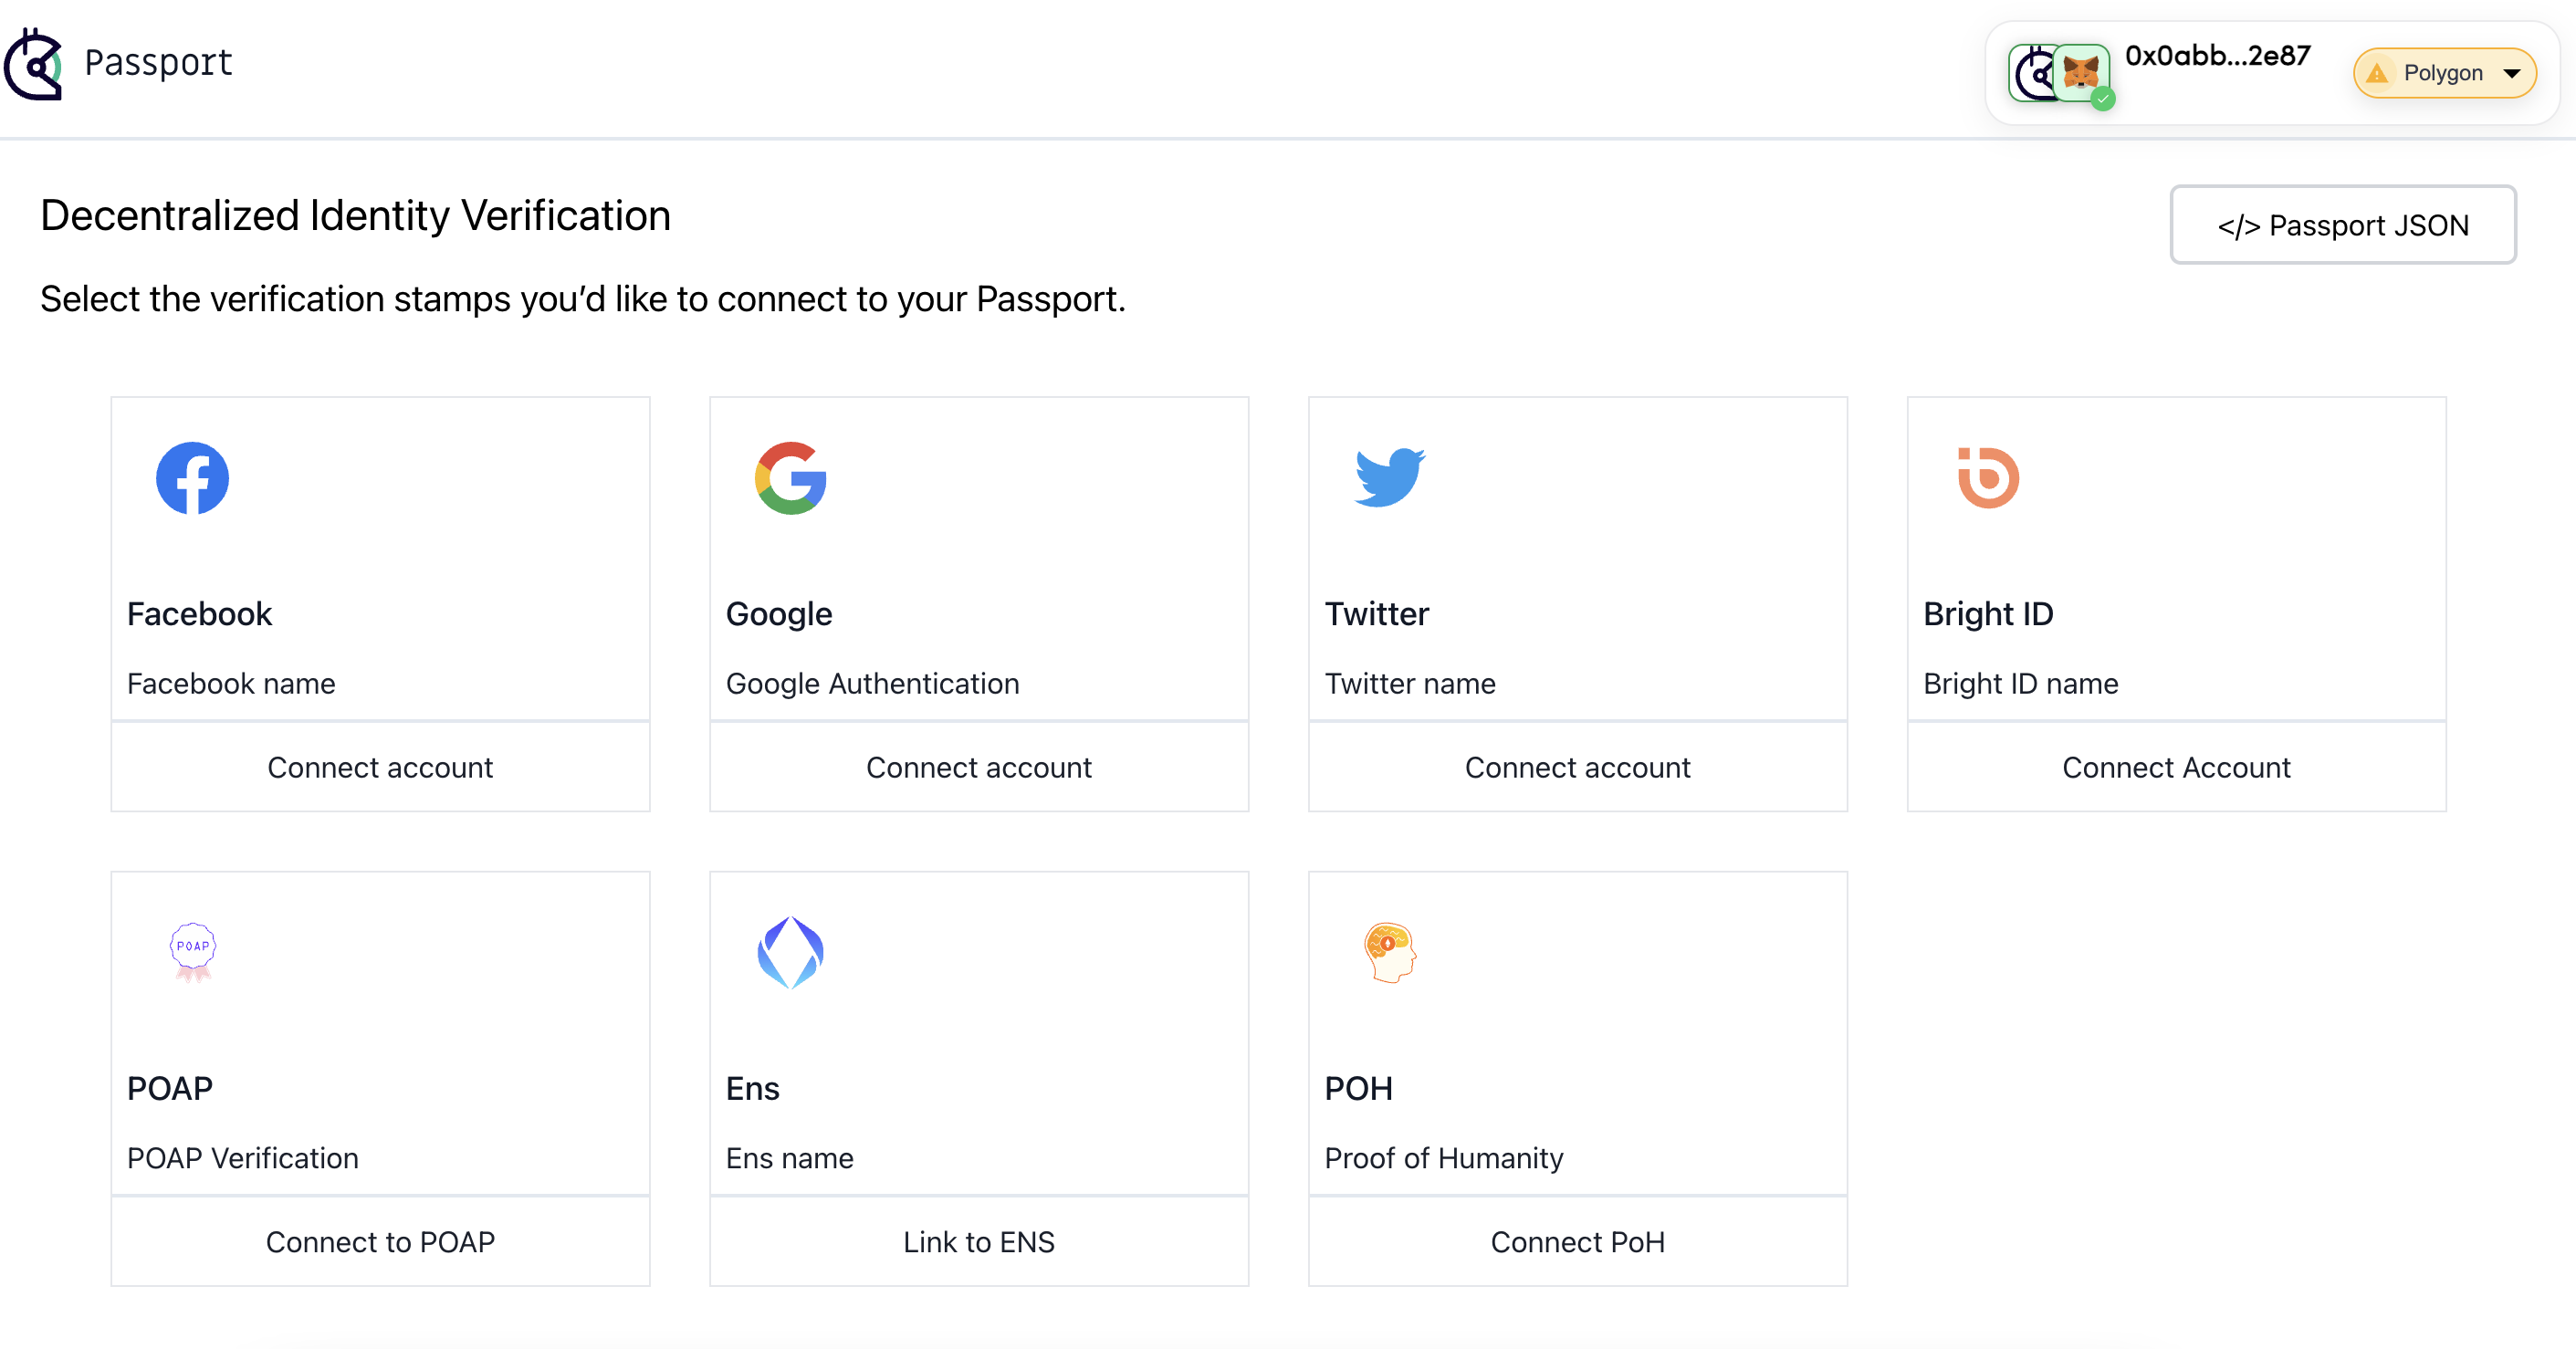 Gitcoin Passport offers seven ways of identity verification